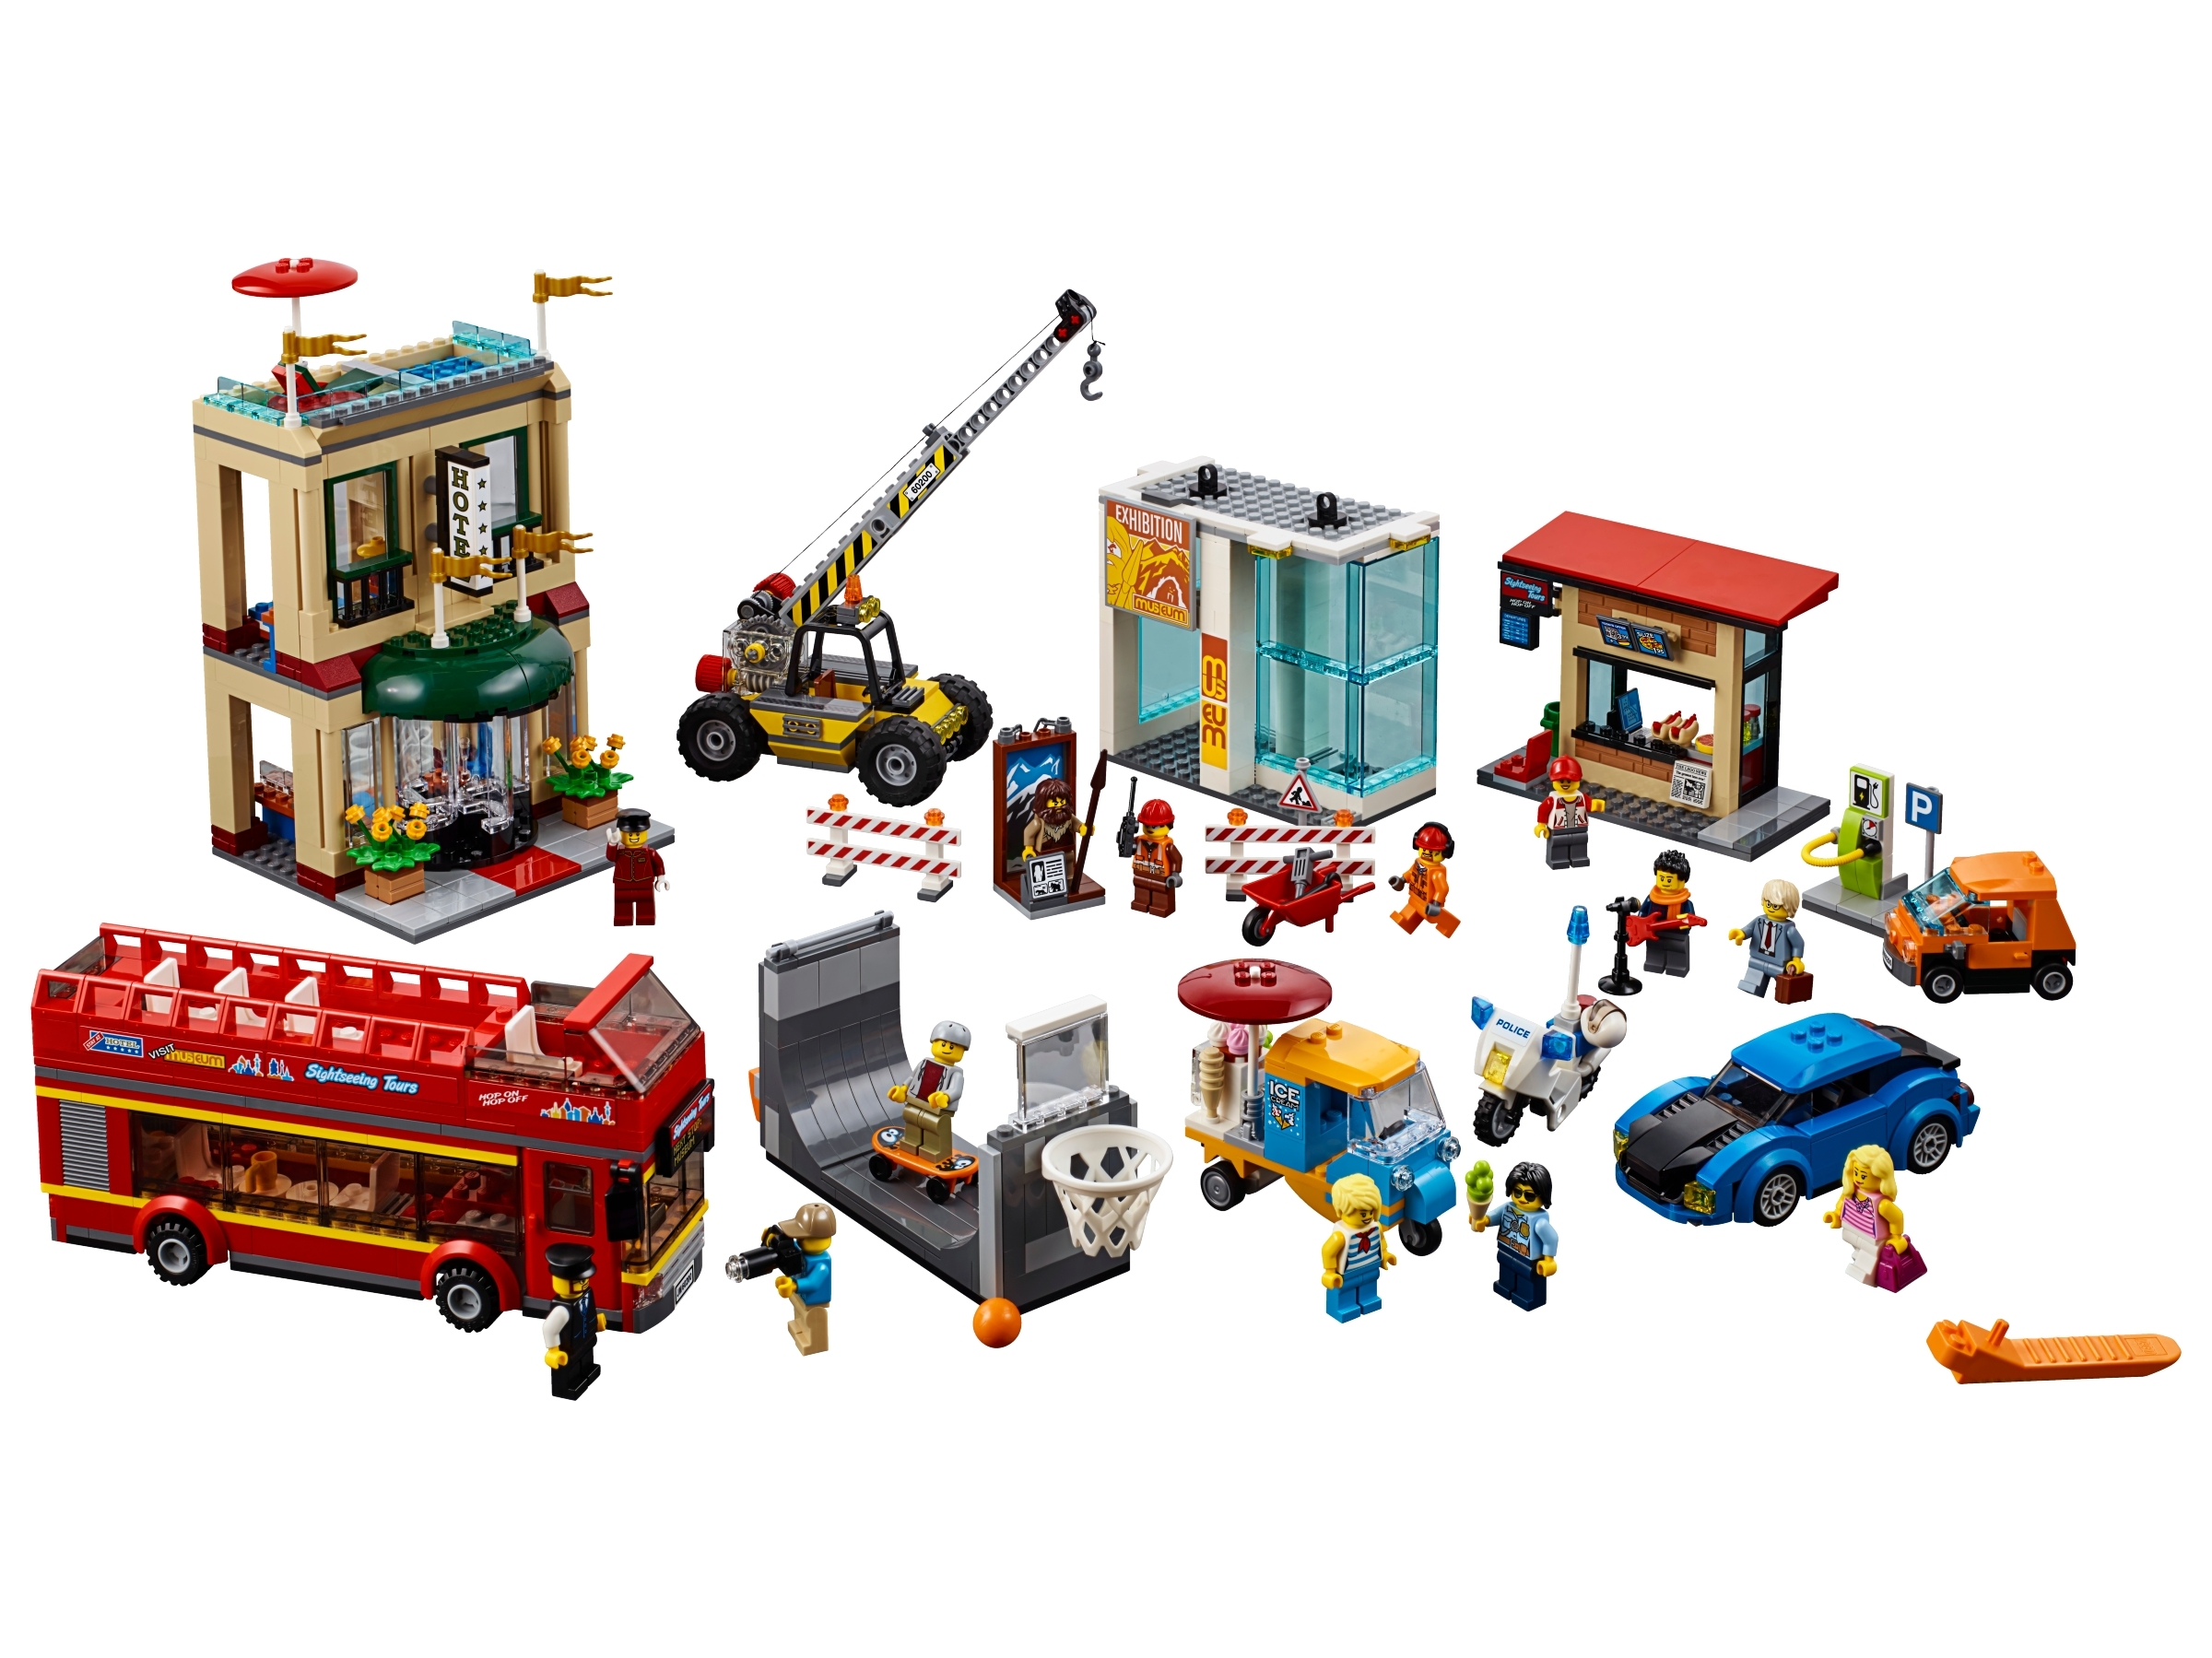 all lego city sets put together